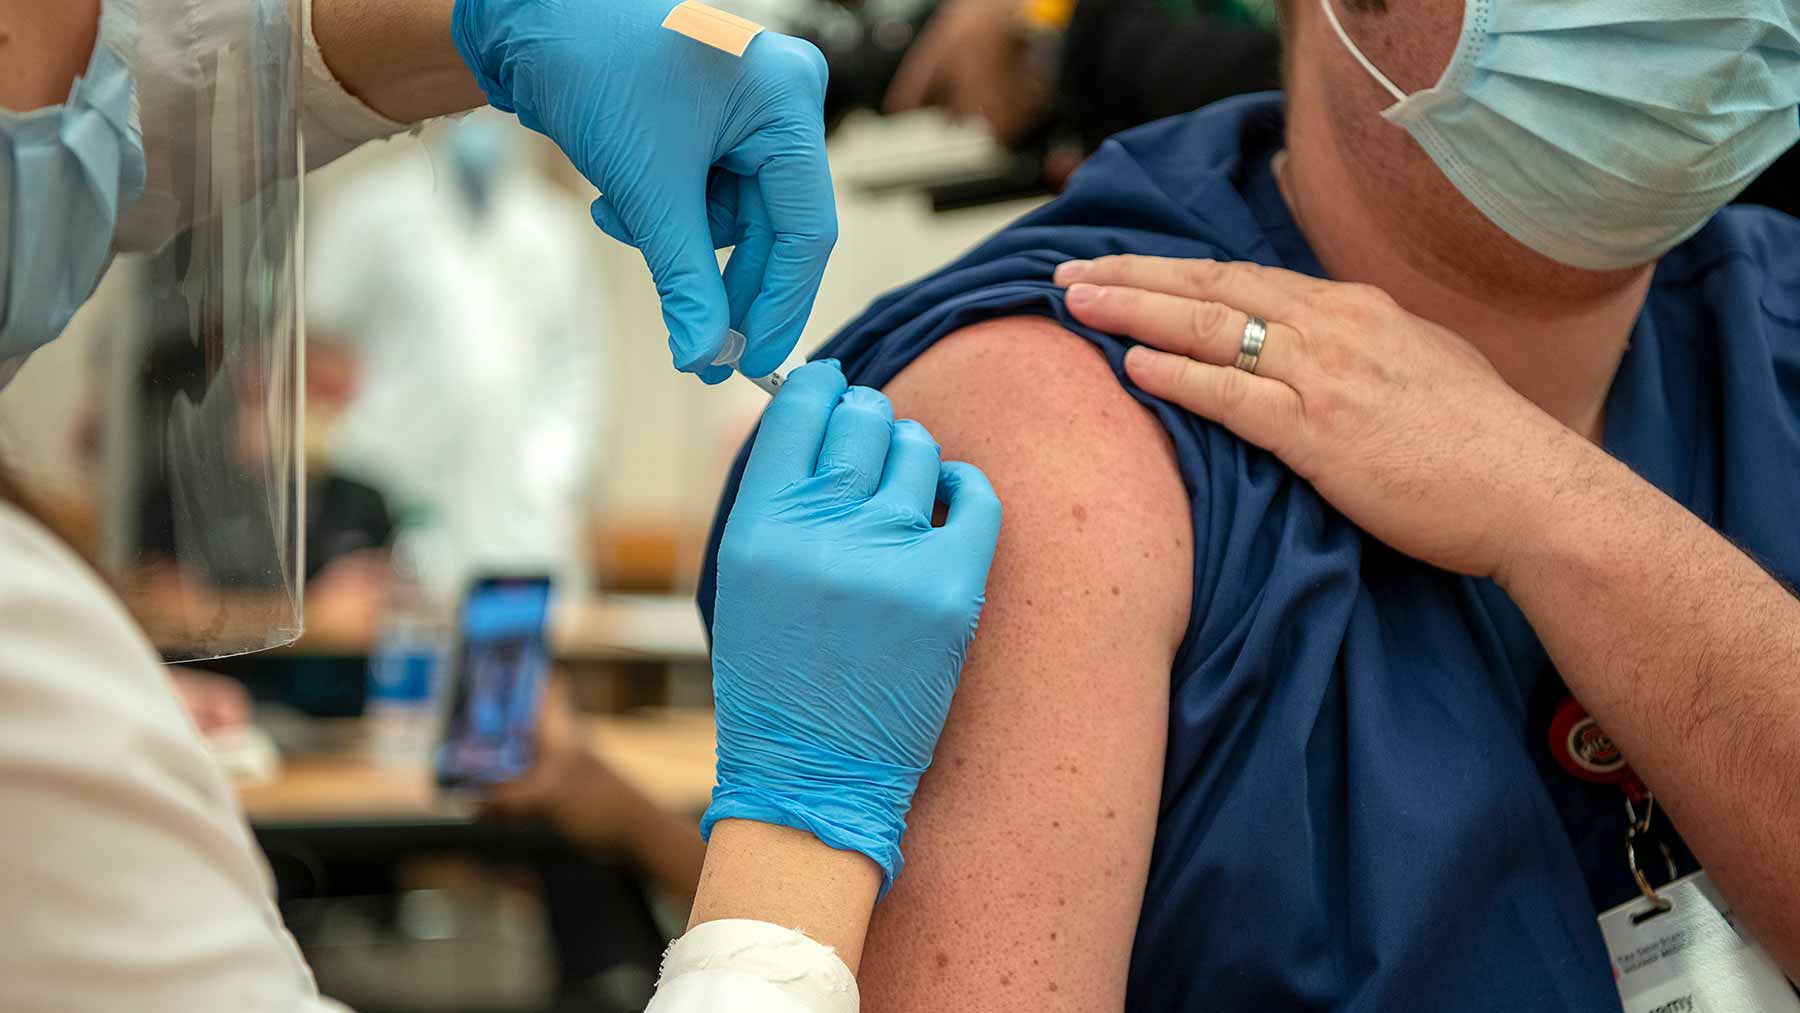 Ohio State University Wexner Medical Center nurse receives Pfizer's COVID-19 vaccine